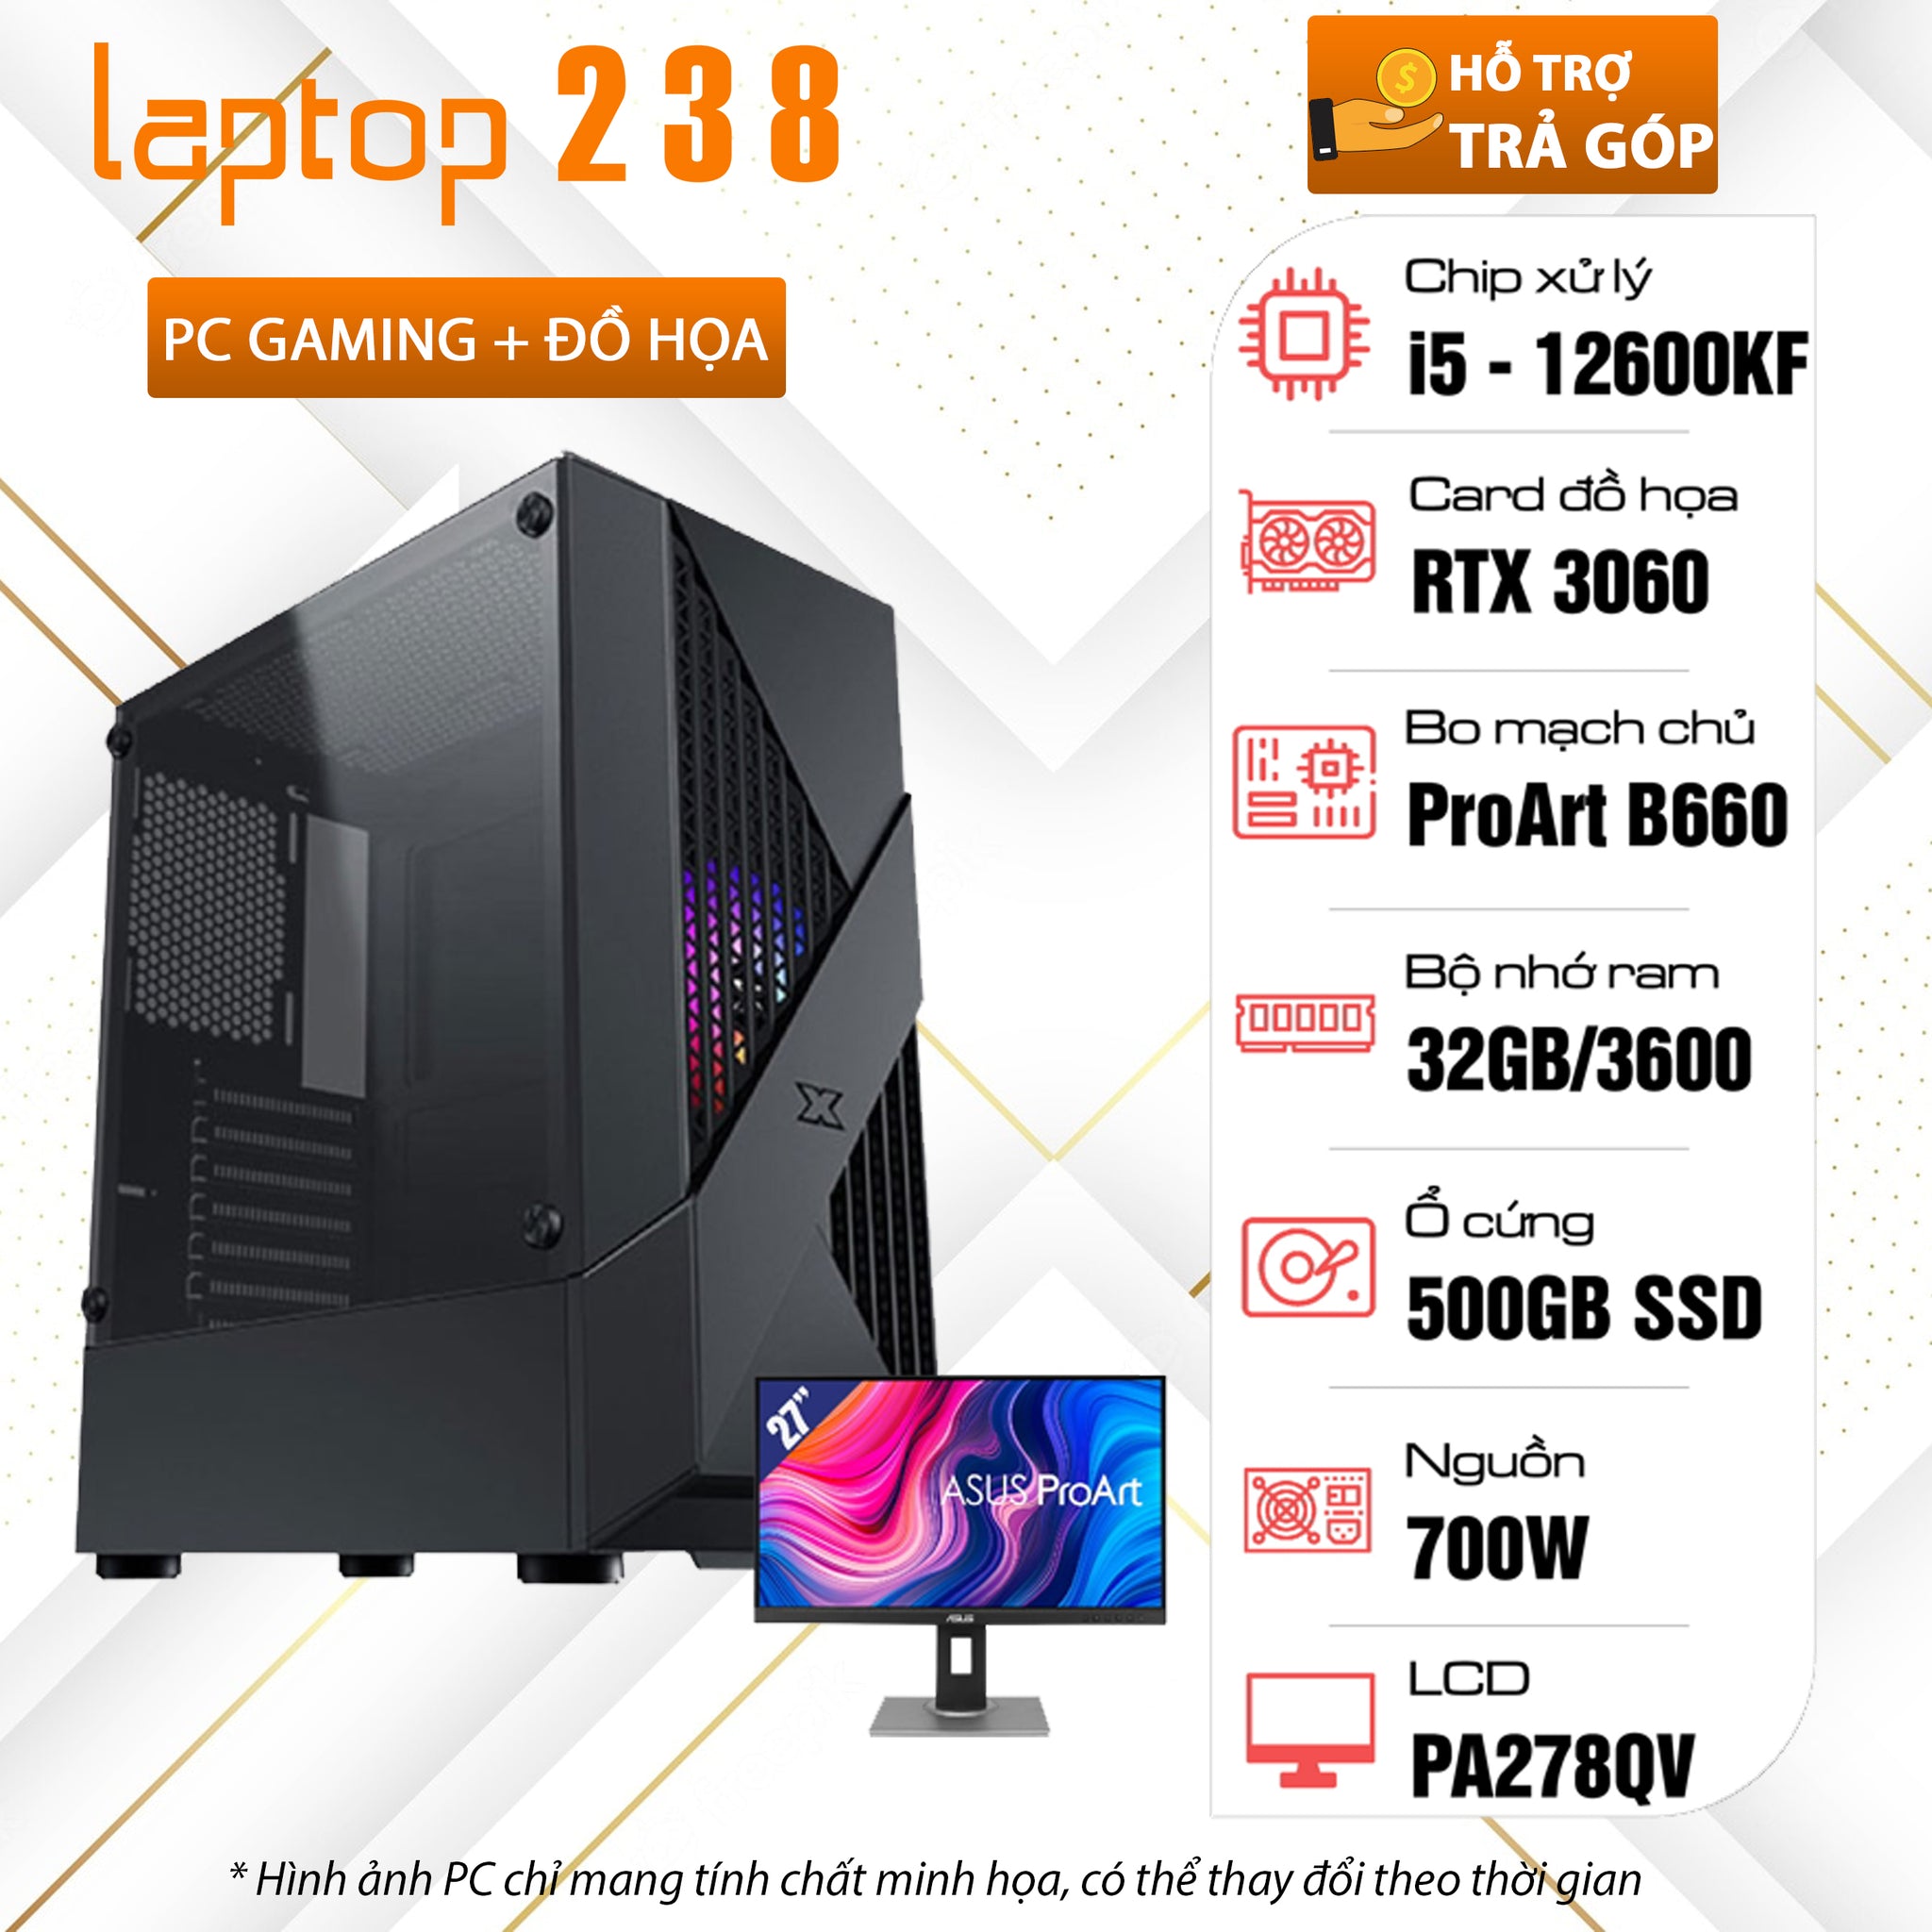 PC 238 Core i5-12600KF